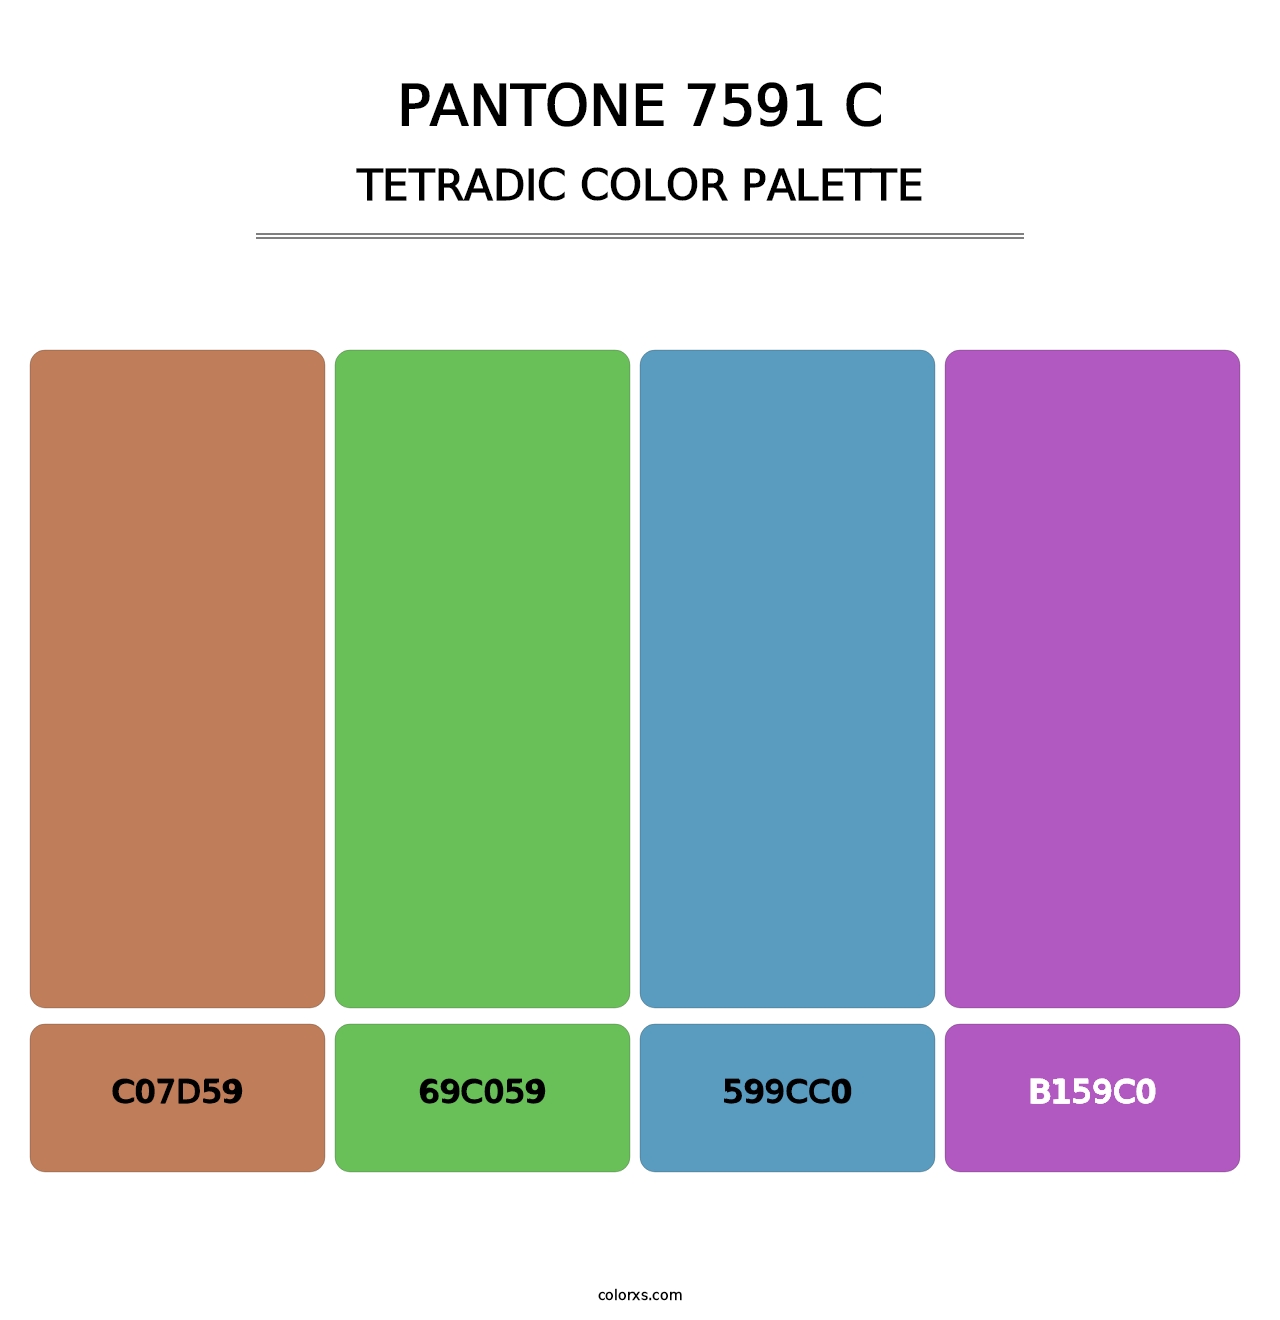 PANTONE 7591 C - Tetradic Color Palette